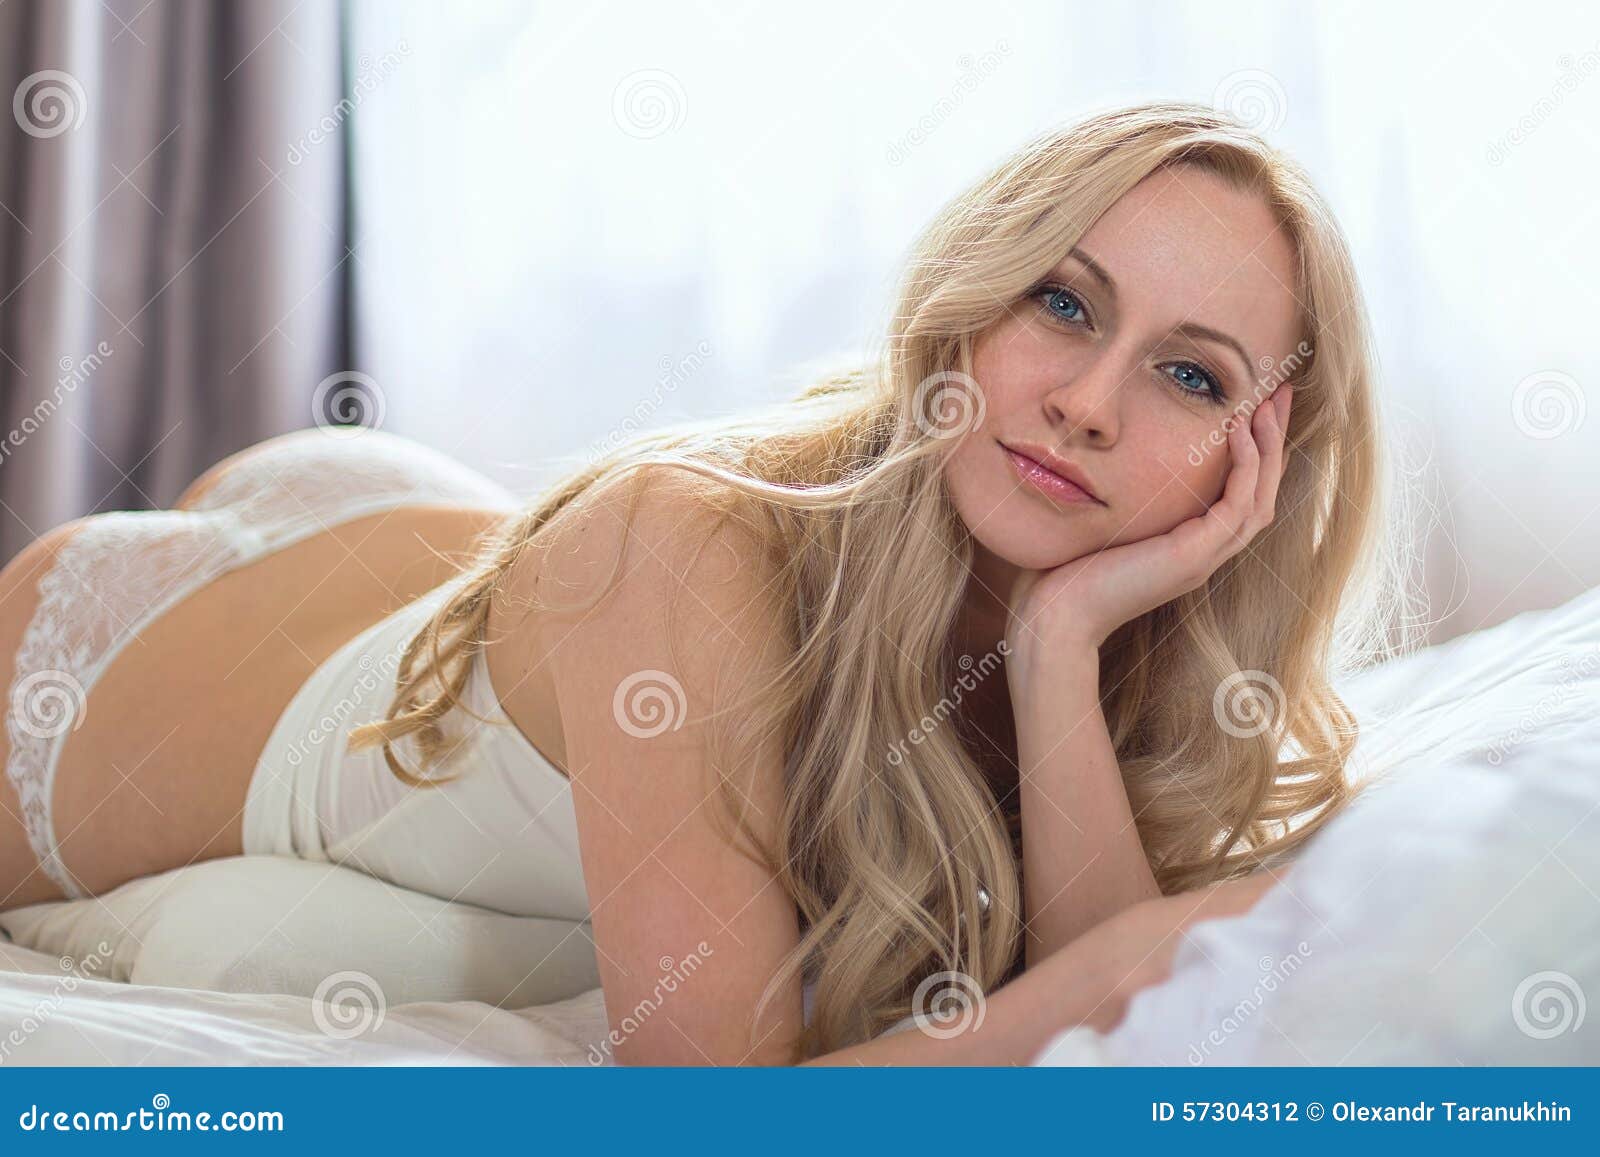 Beautiful nude blonde women on beds